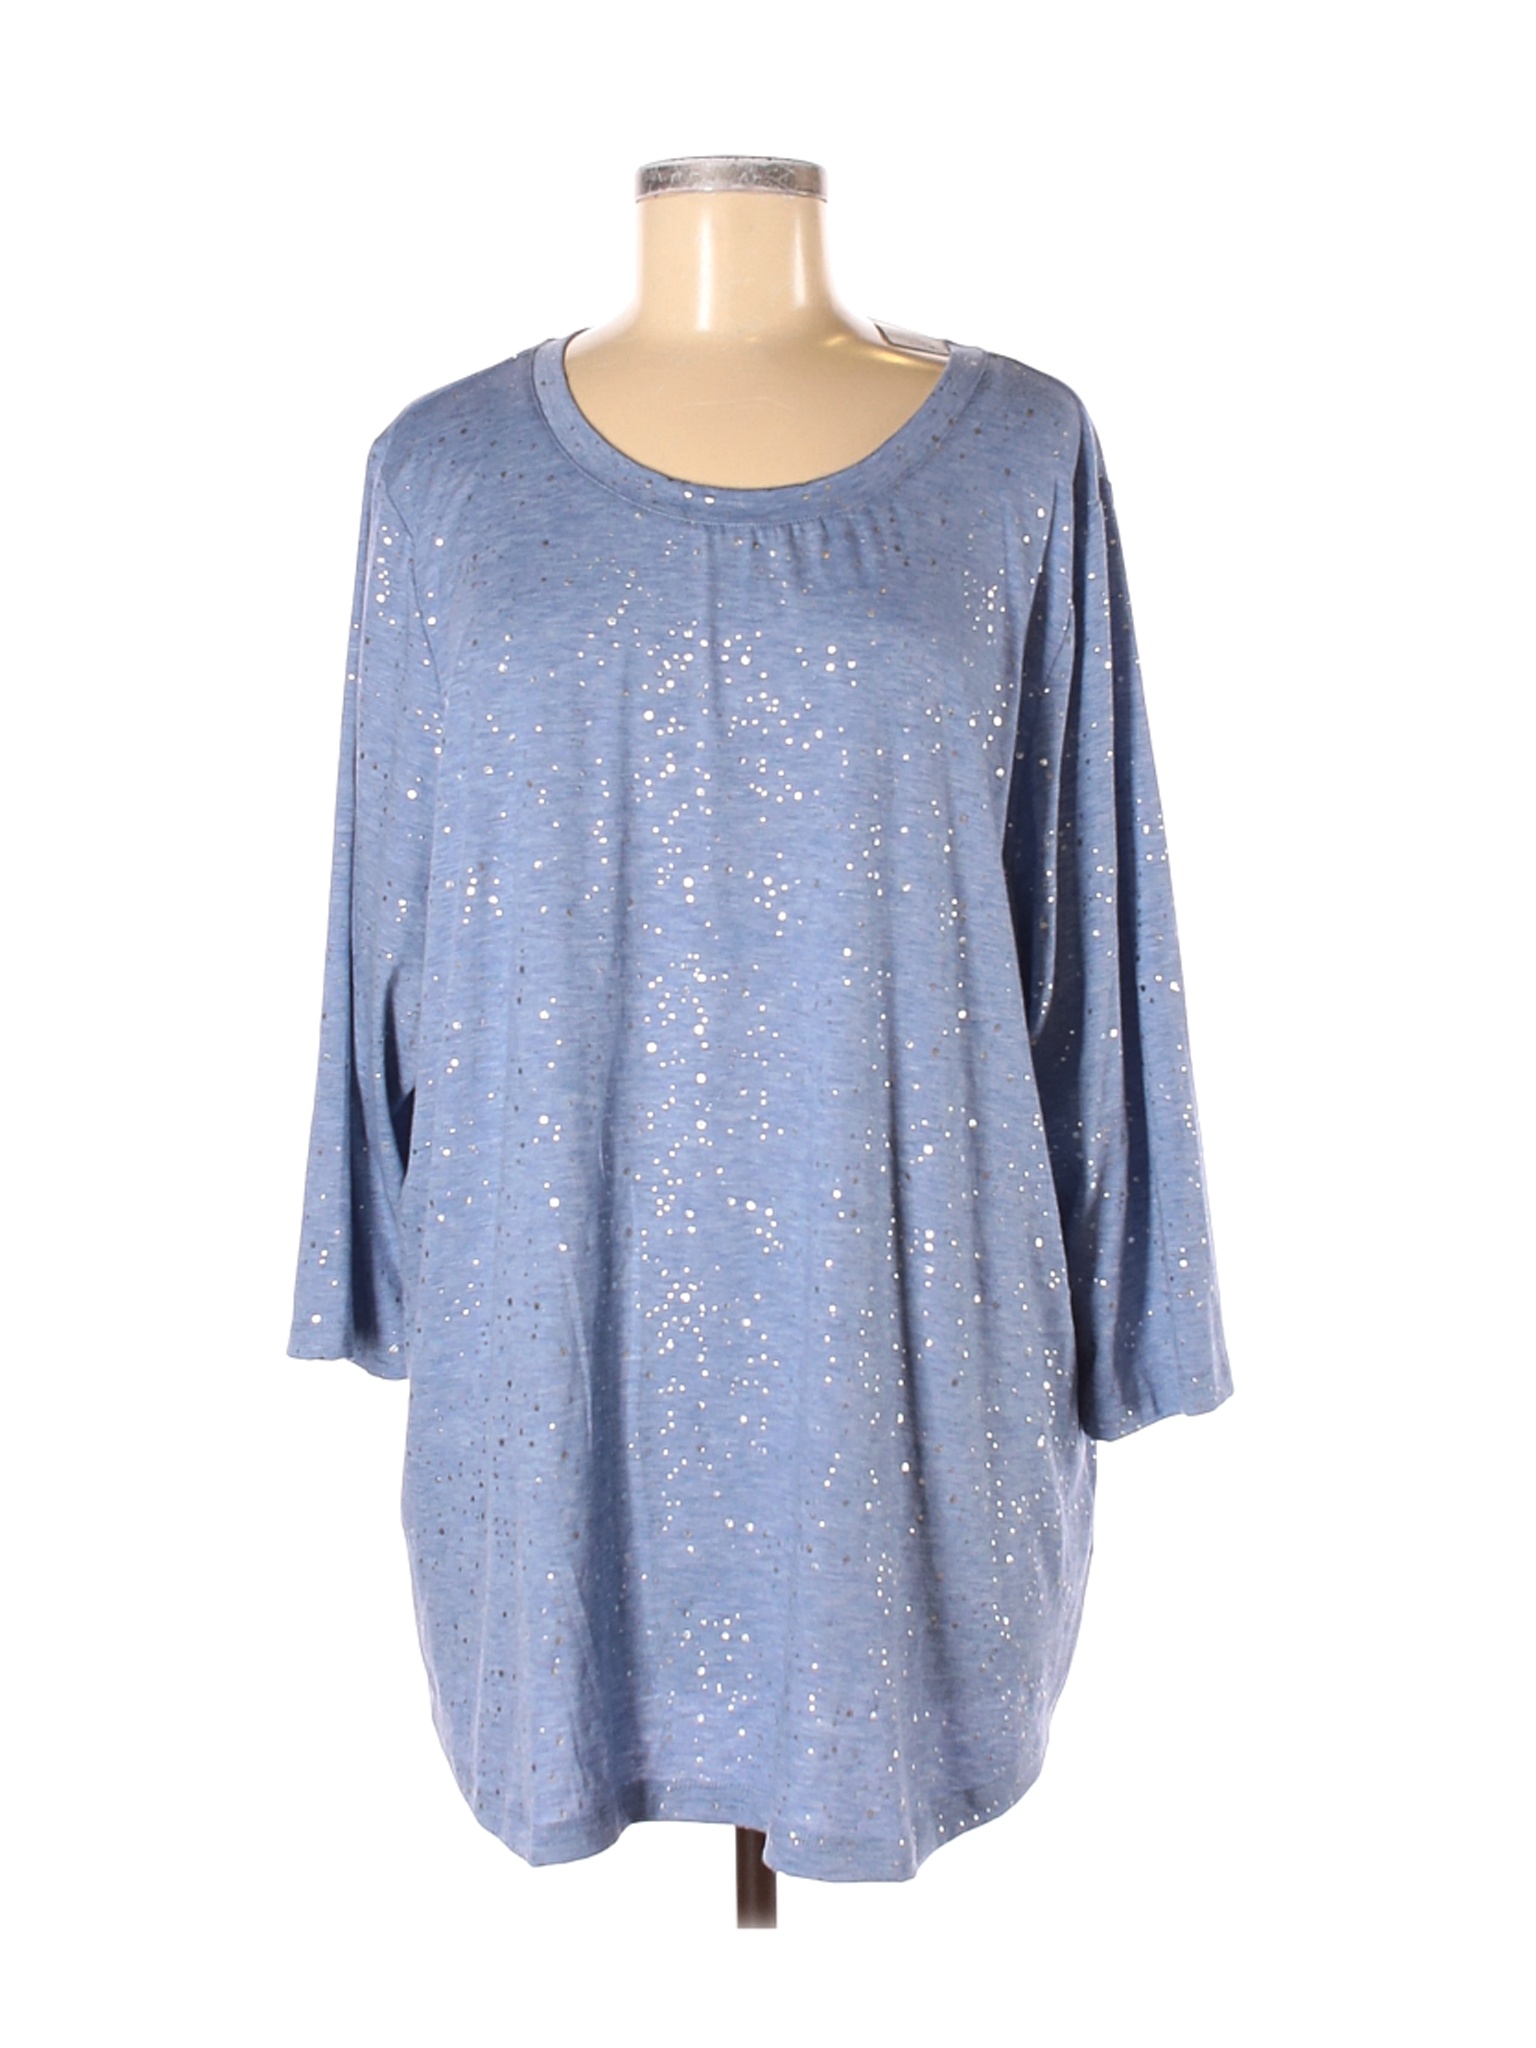 NWT Cj Banks Women Blue 3/4 Sleeve T-Shirt 2 | eBay